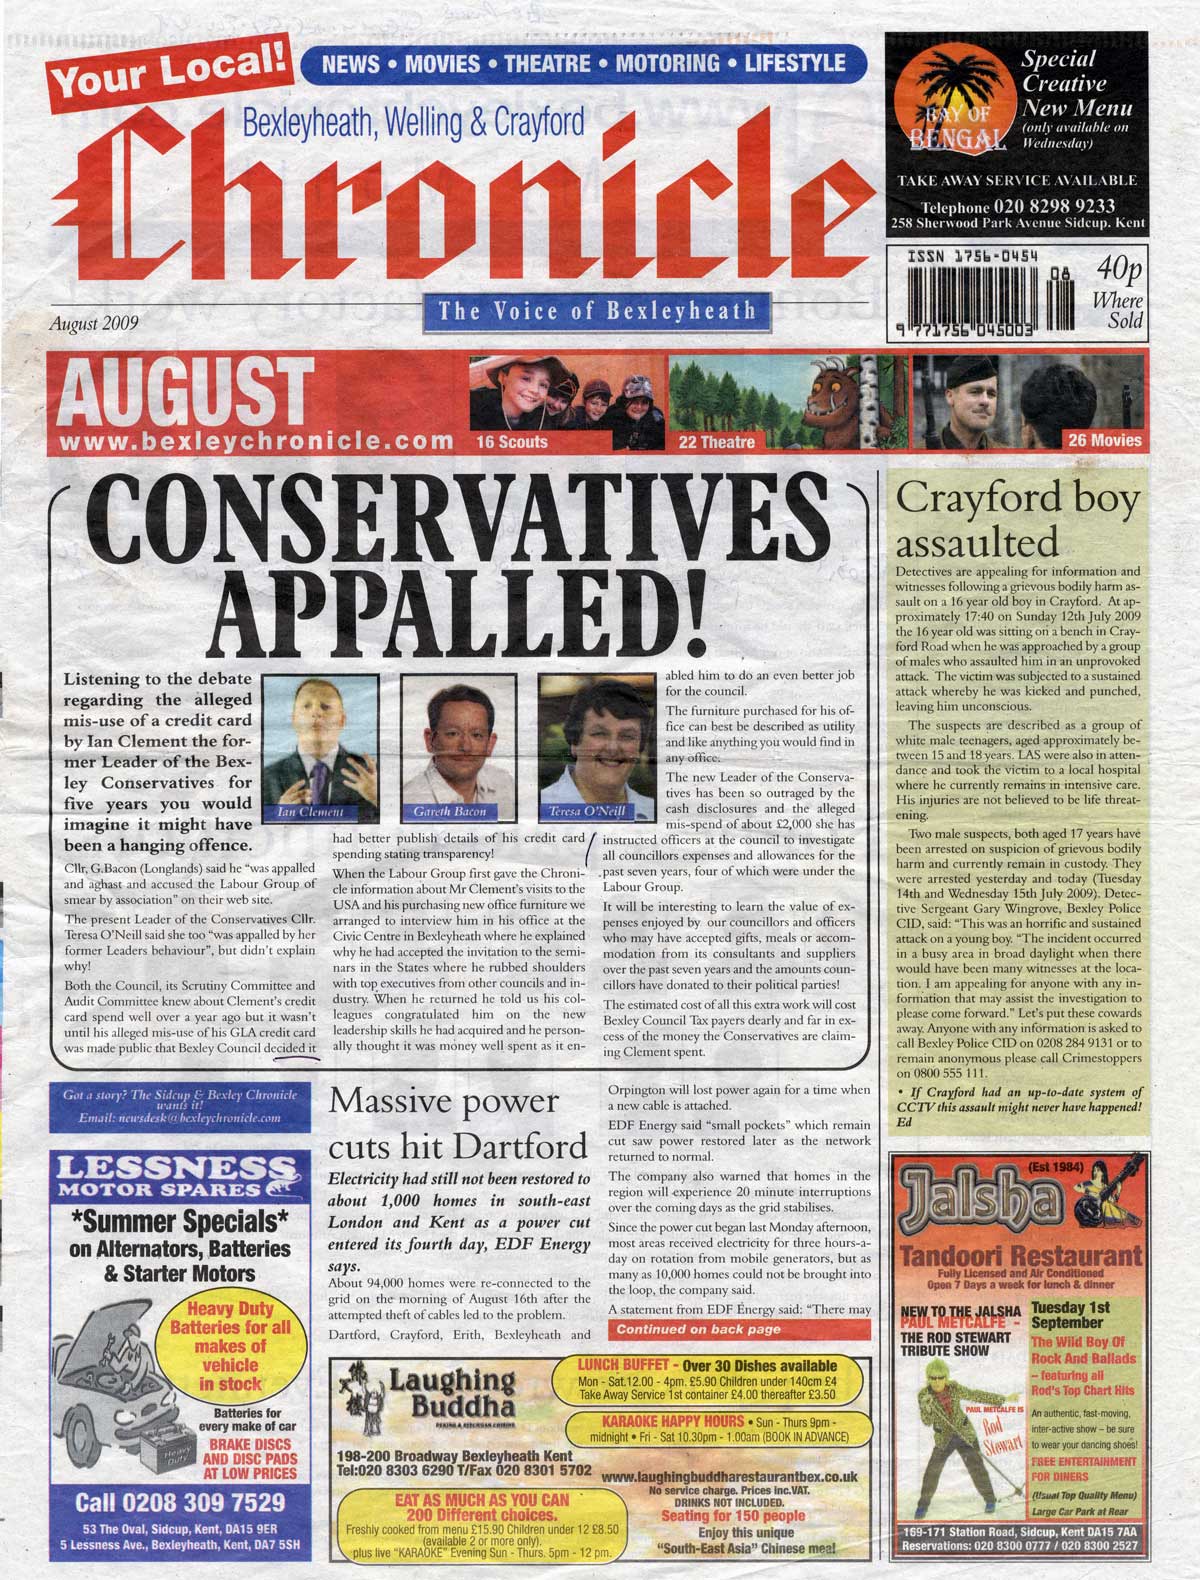 Bexleyheath Chronicle, August 2009, page 1